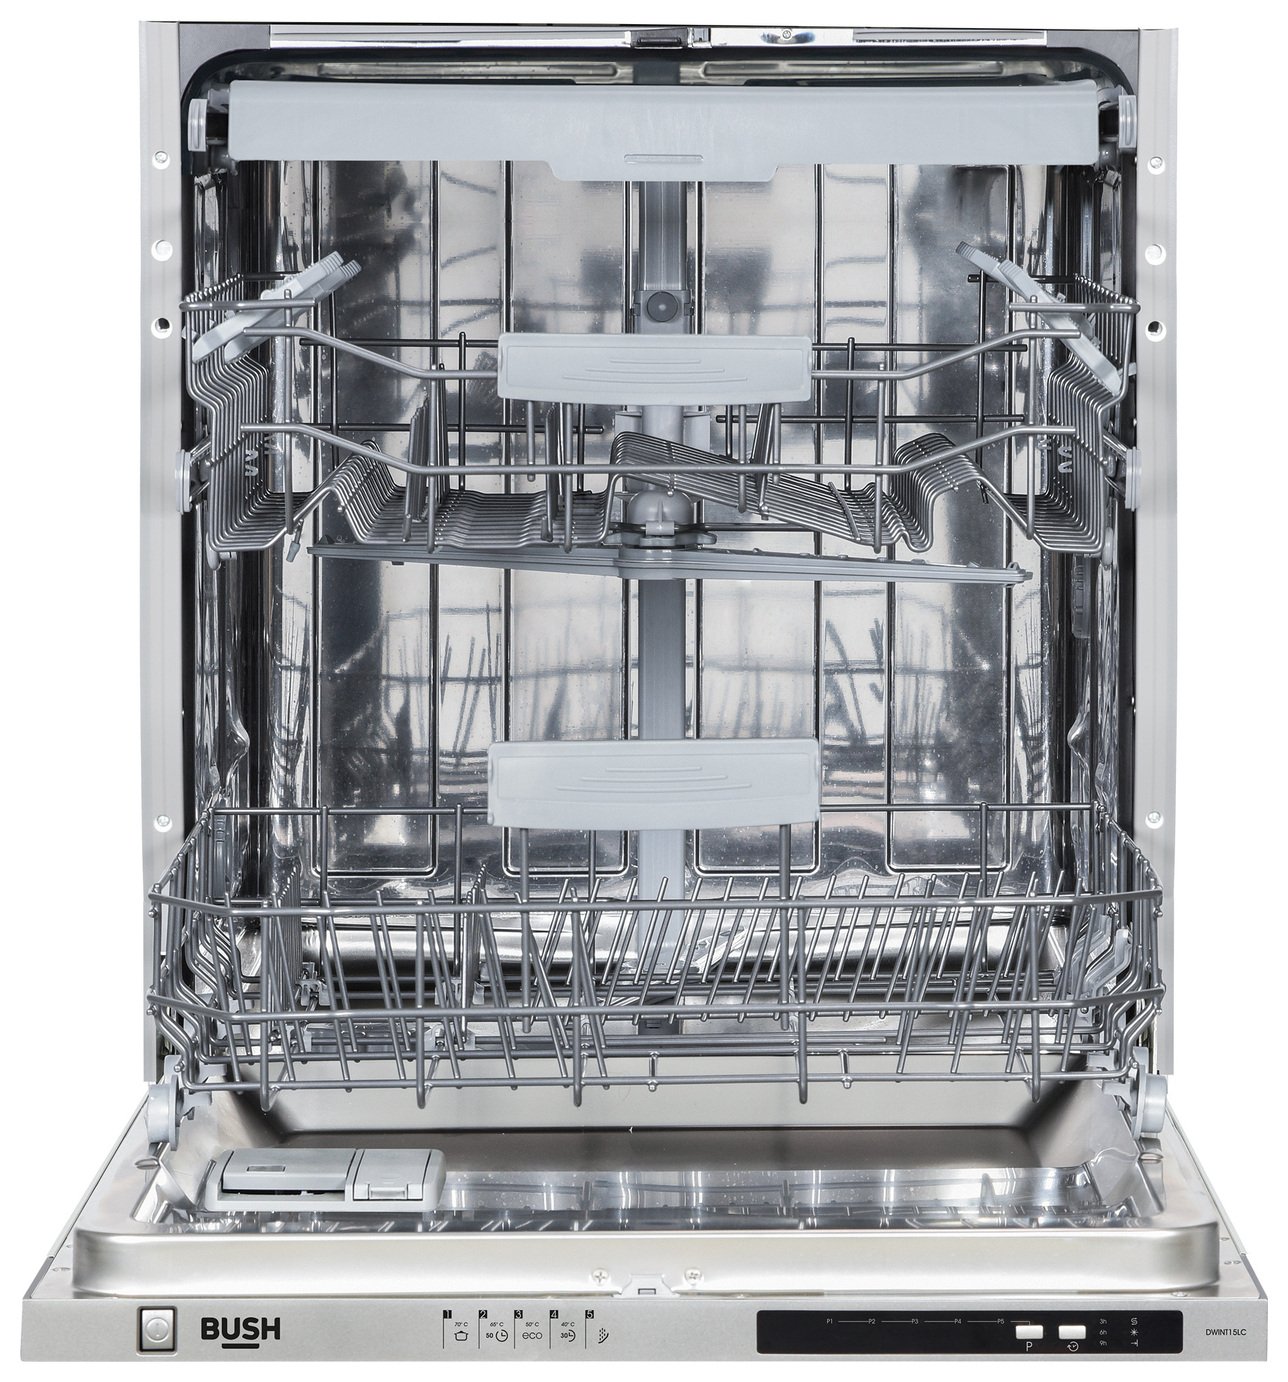 Bush DWINT15LC Full Size Full Integrated Dishwasher - Silver